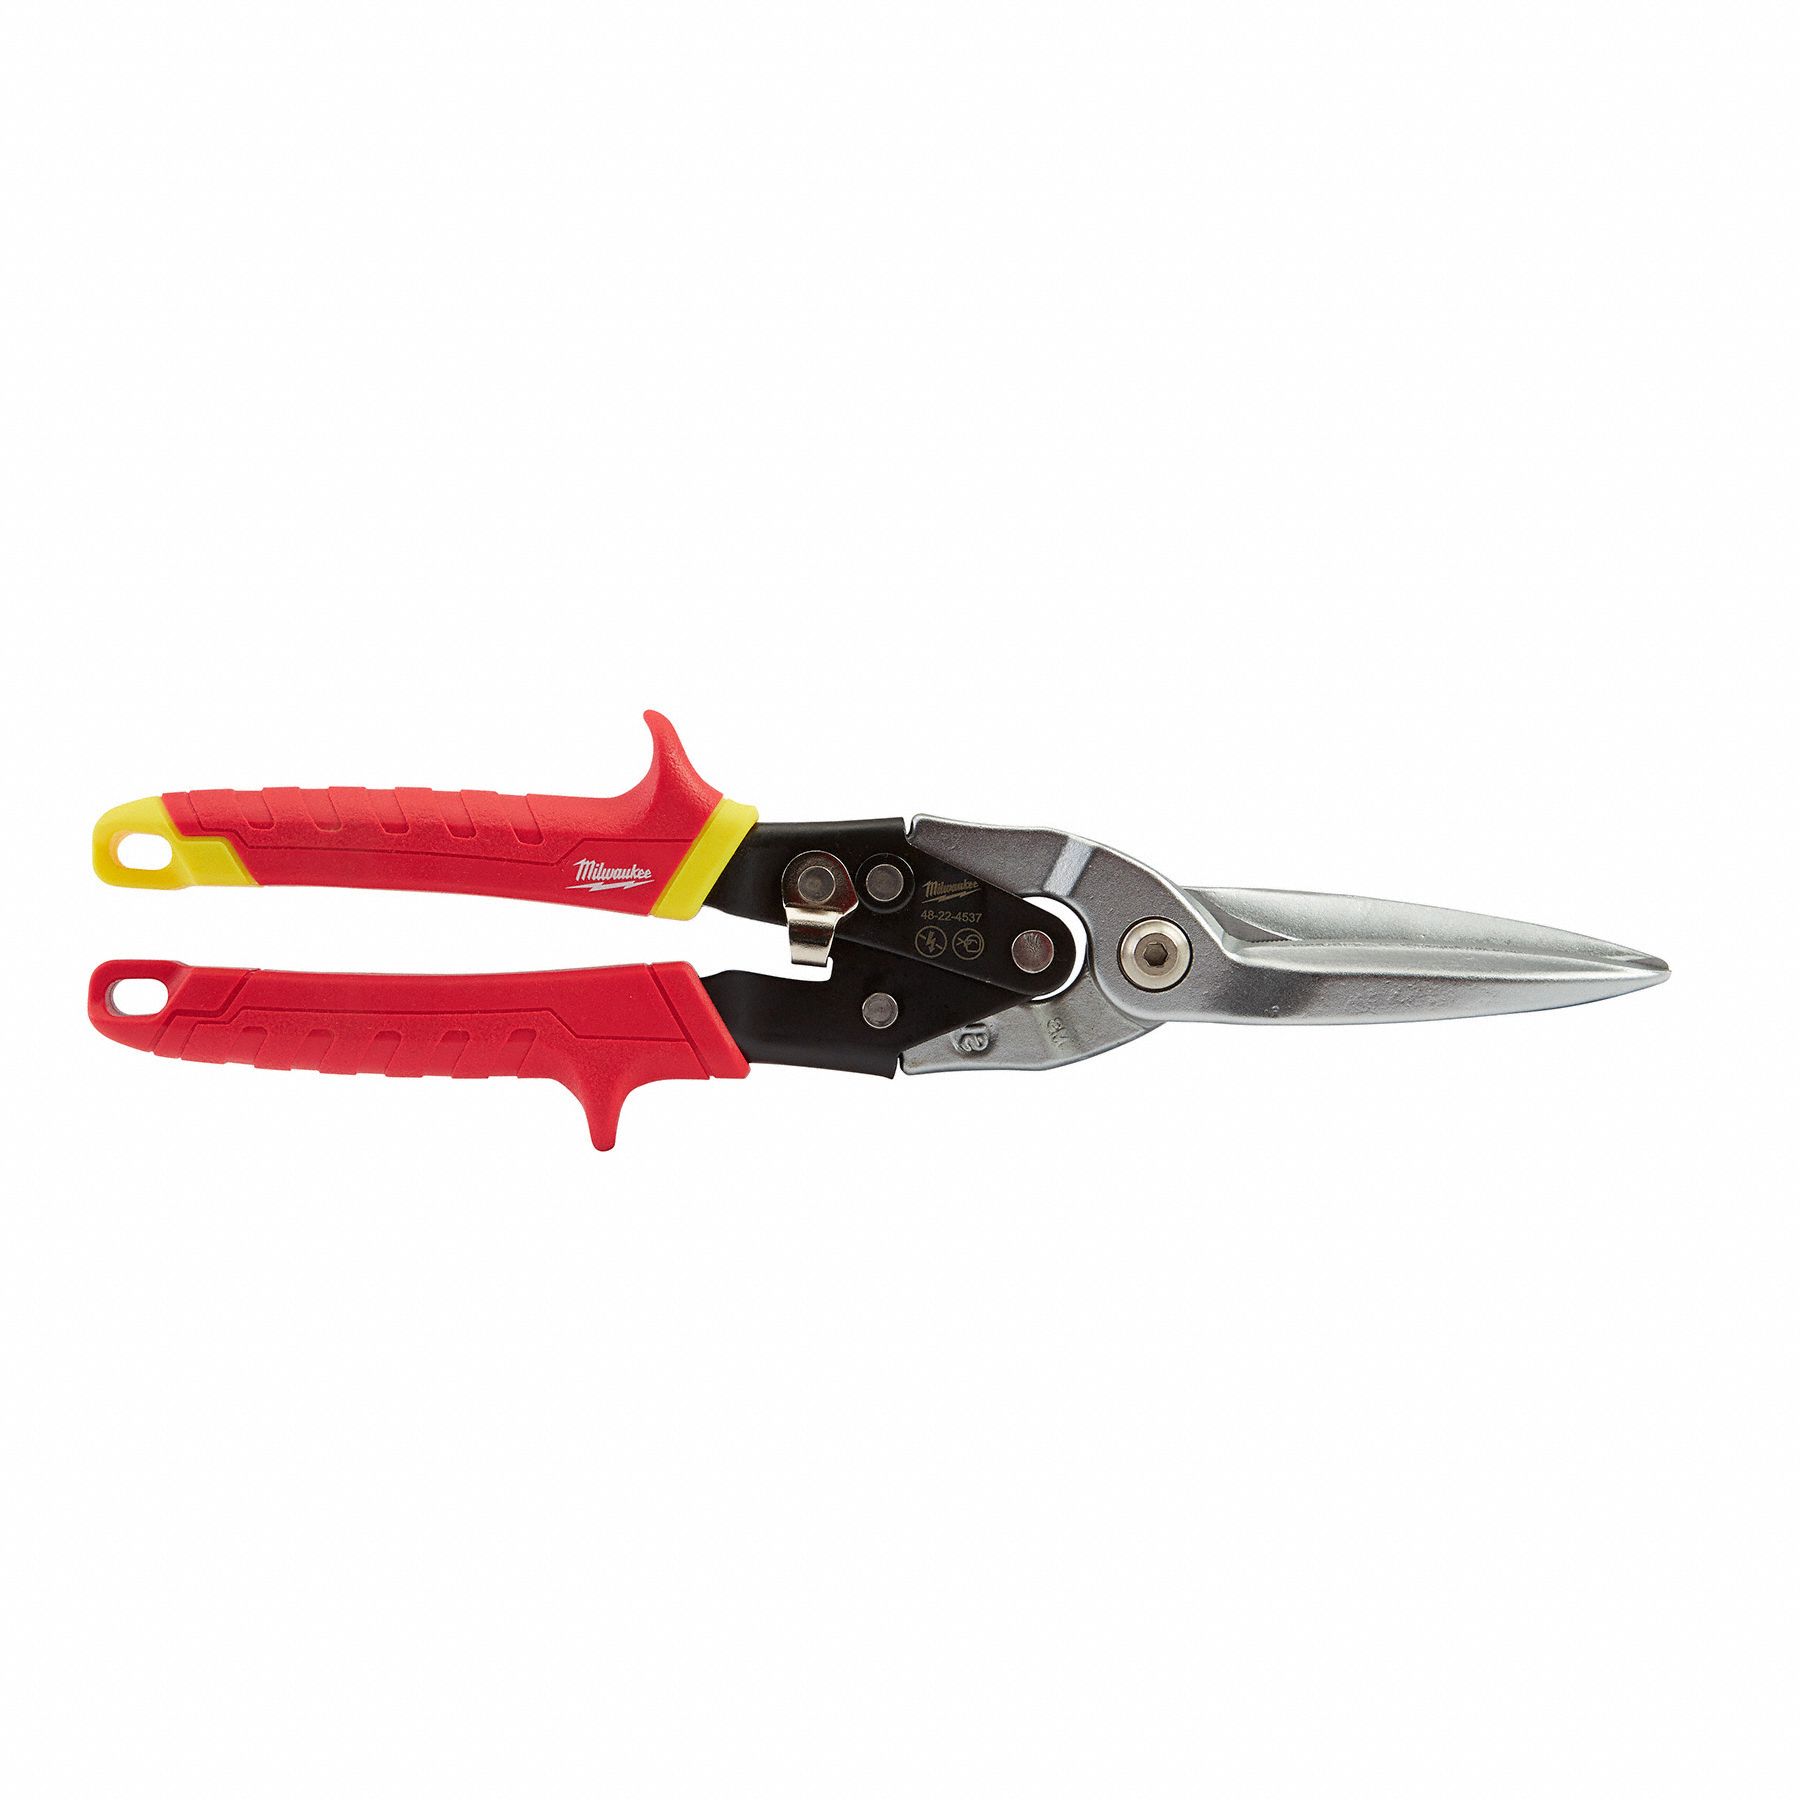 MILWAUKEE 48-22-4537 Offset Snip,6-1/2 Cutting Length